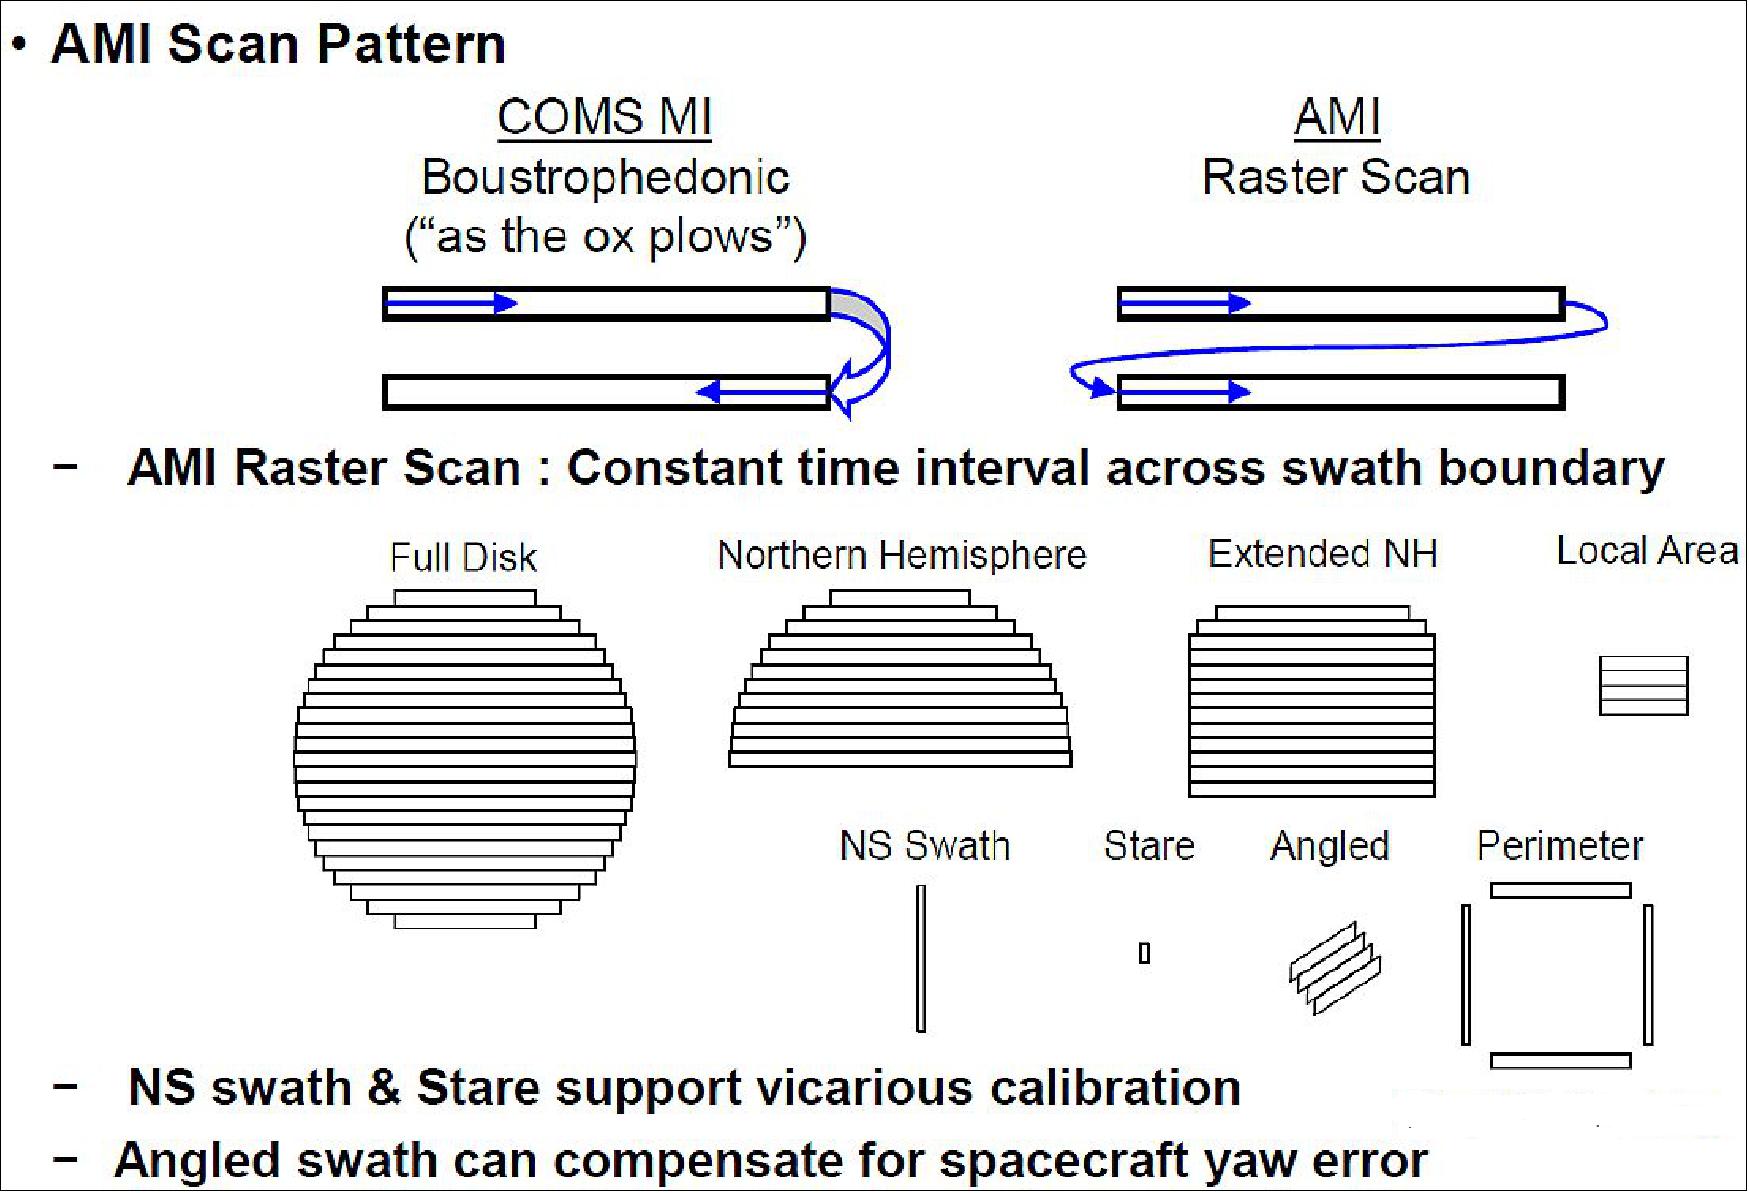 Figure 20: AMI scan pattern (image credit: Harris Corporation, KARI)